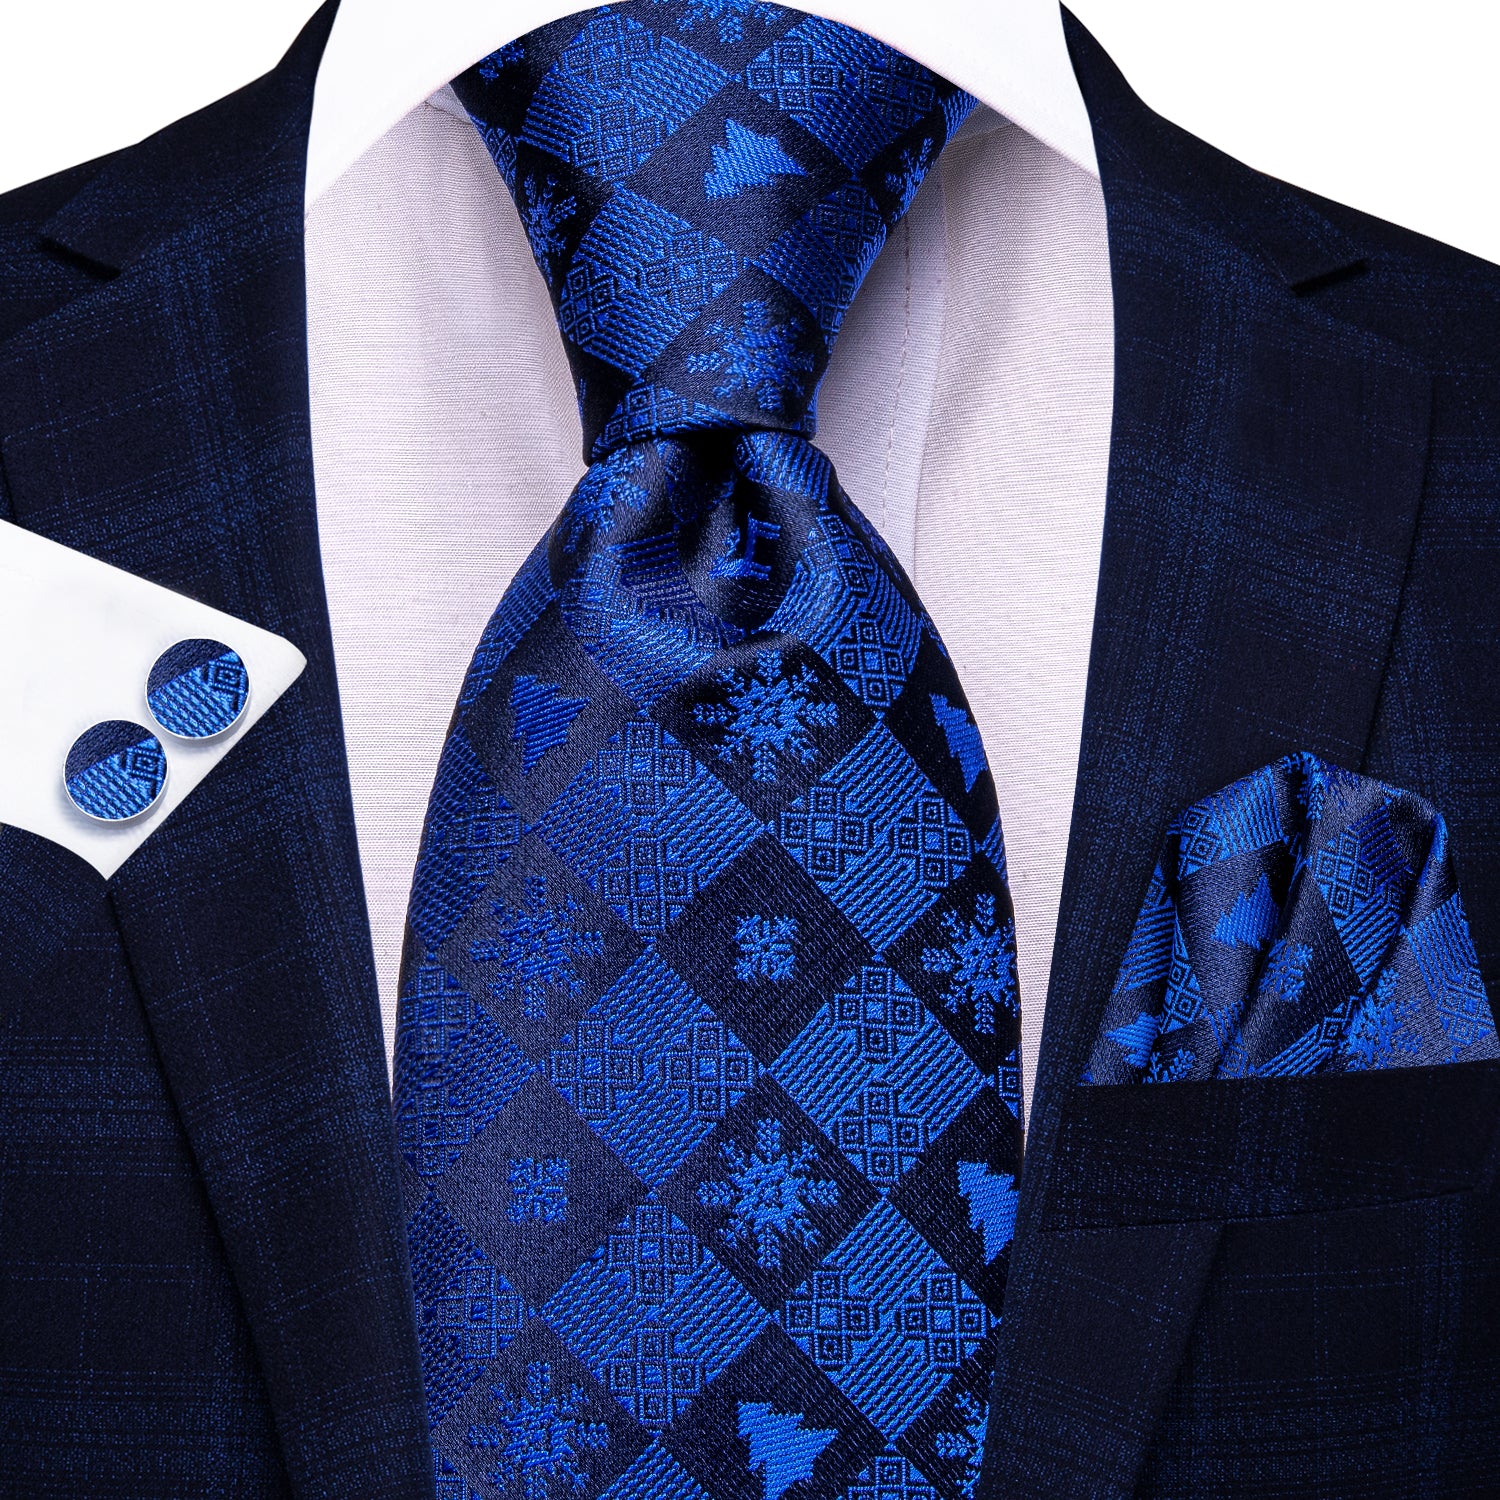 Christmas Ocean Blue Novelty Men's Tie Pocket Square Cufflinks Set